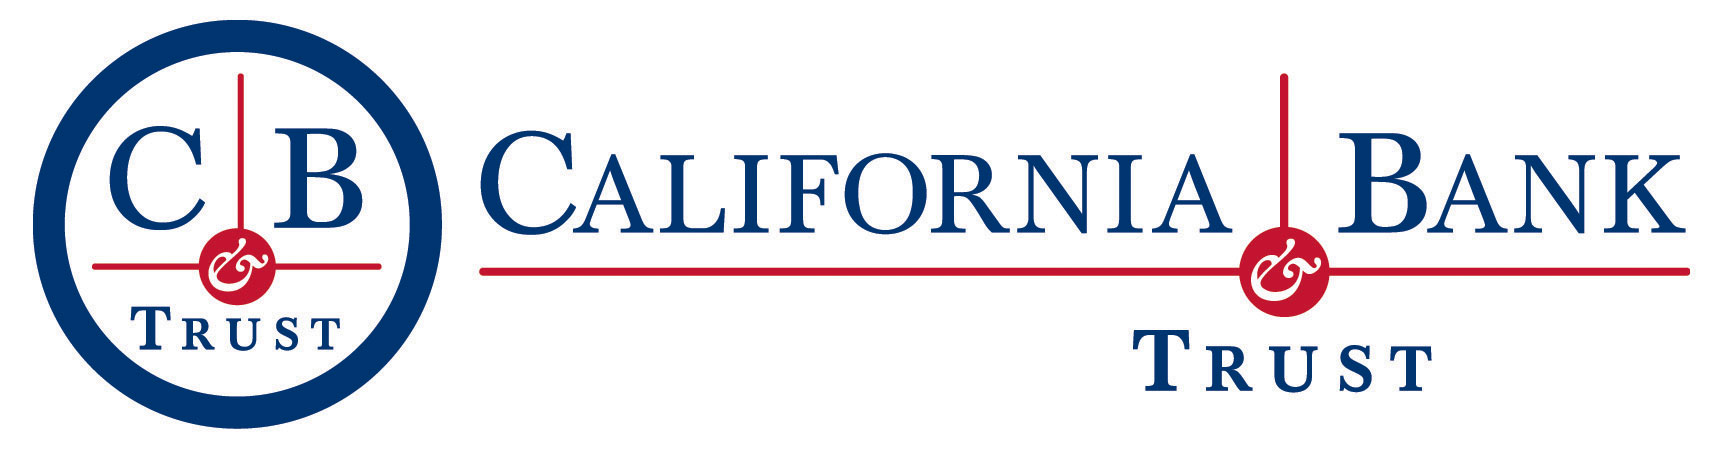 California_Bank_Trust_logo